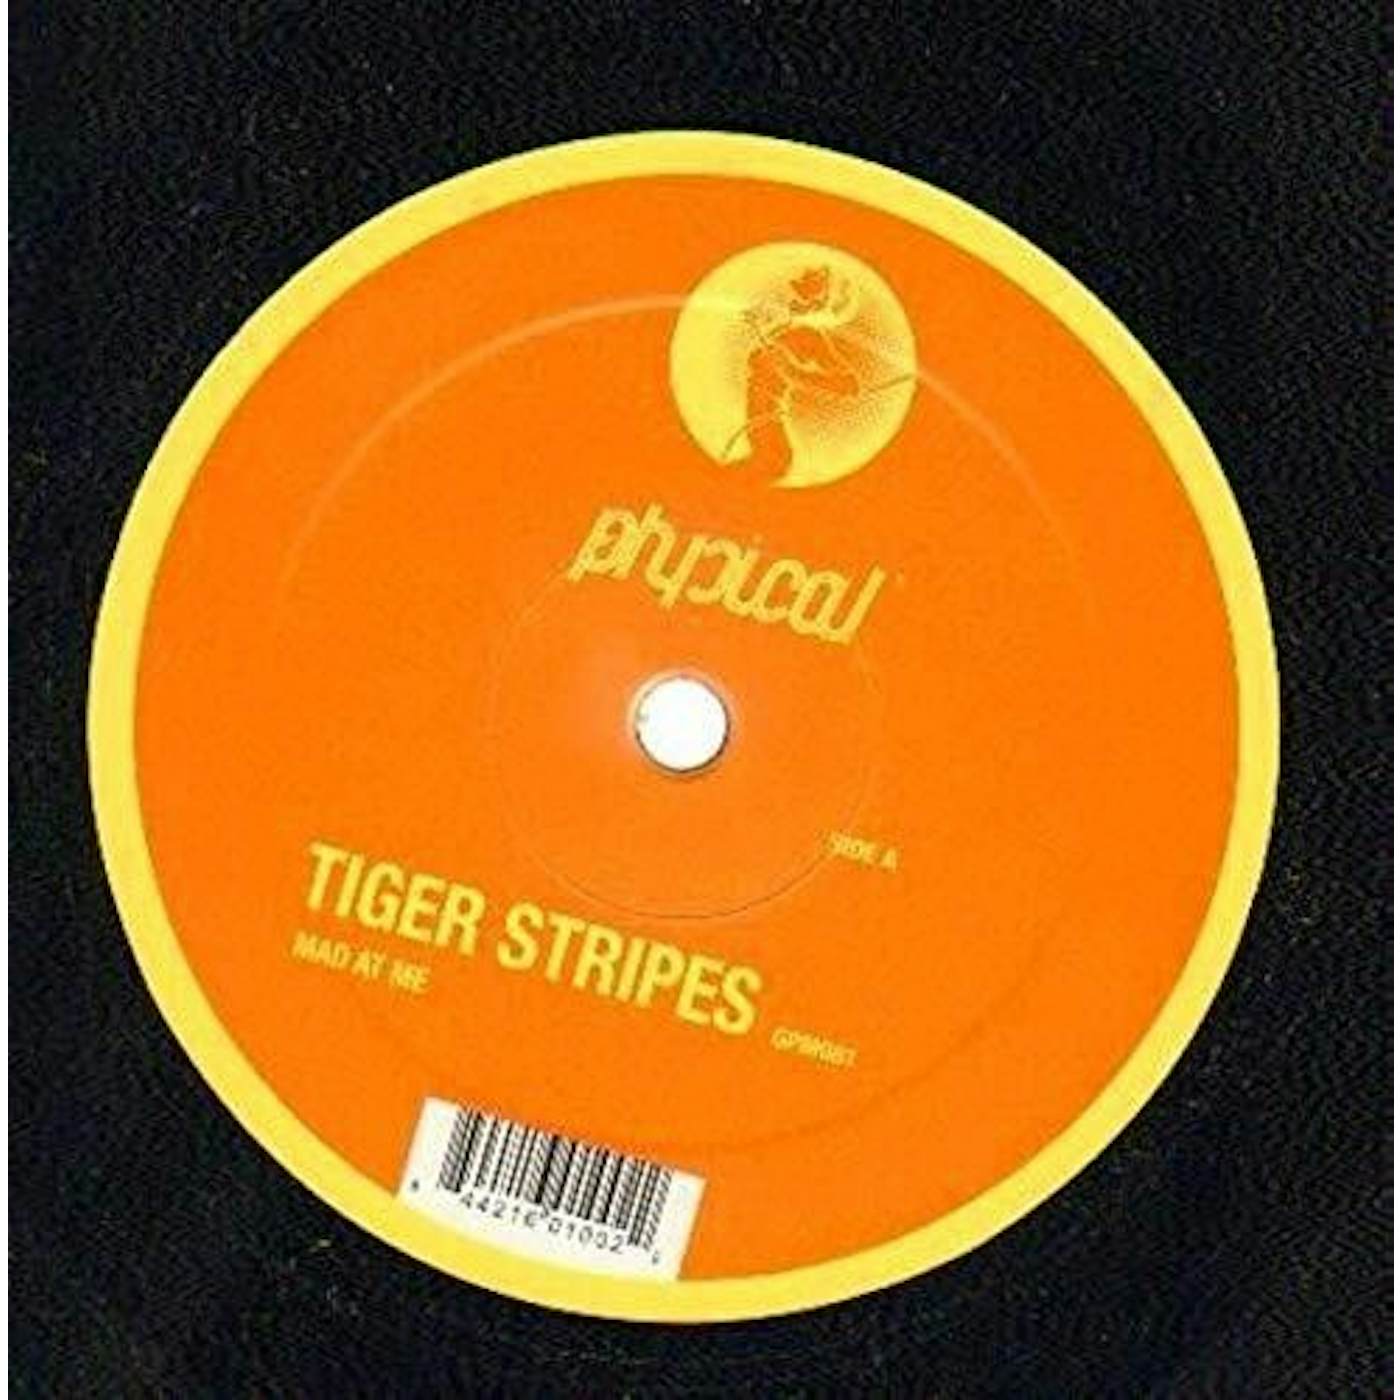 Tiger Stripes Mad At Me Vinyl Record